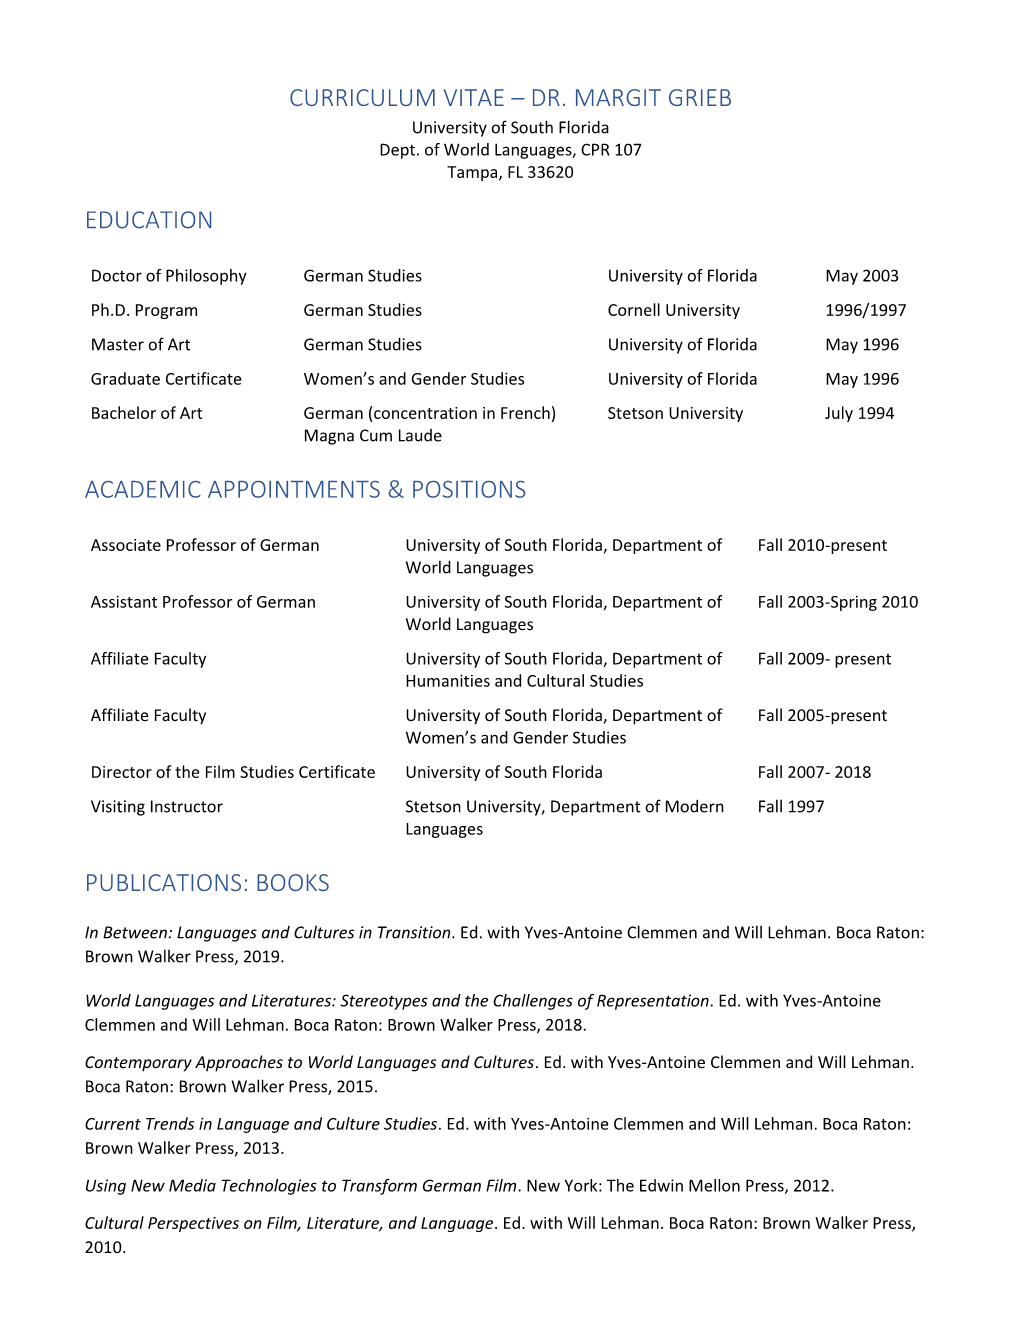 Curriculum Vitae – Dr. Margit Grieb Education Academic Appointments & Positions Publications: Books